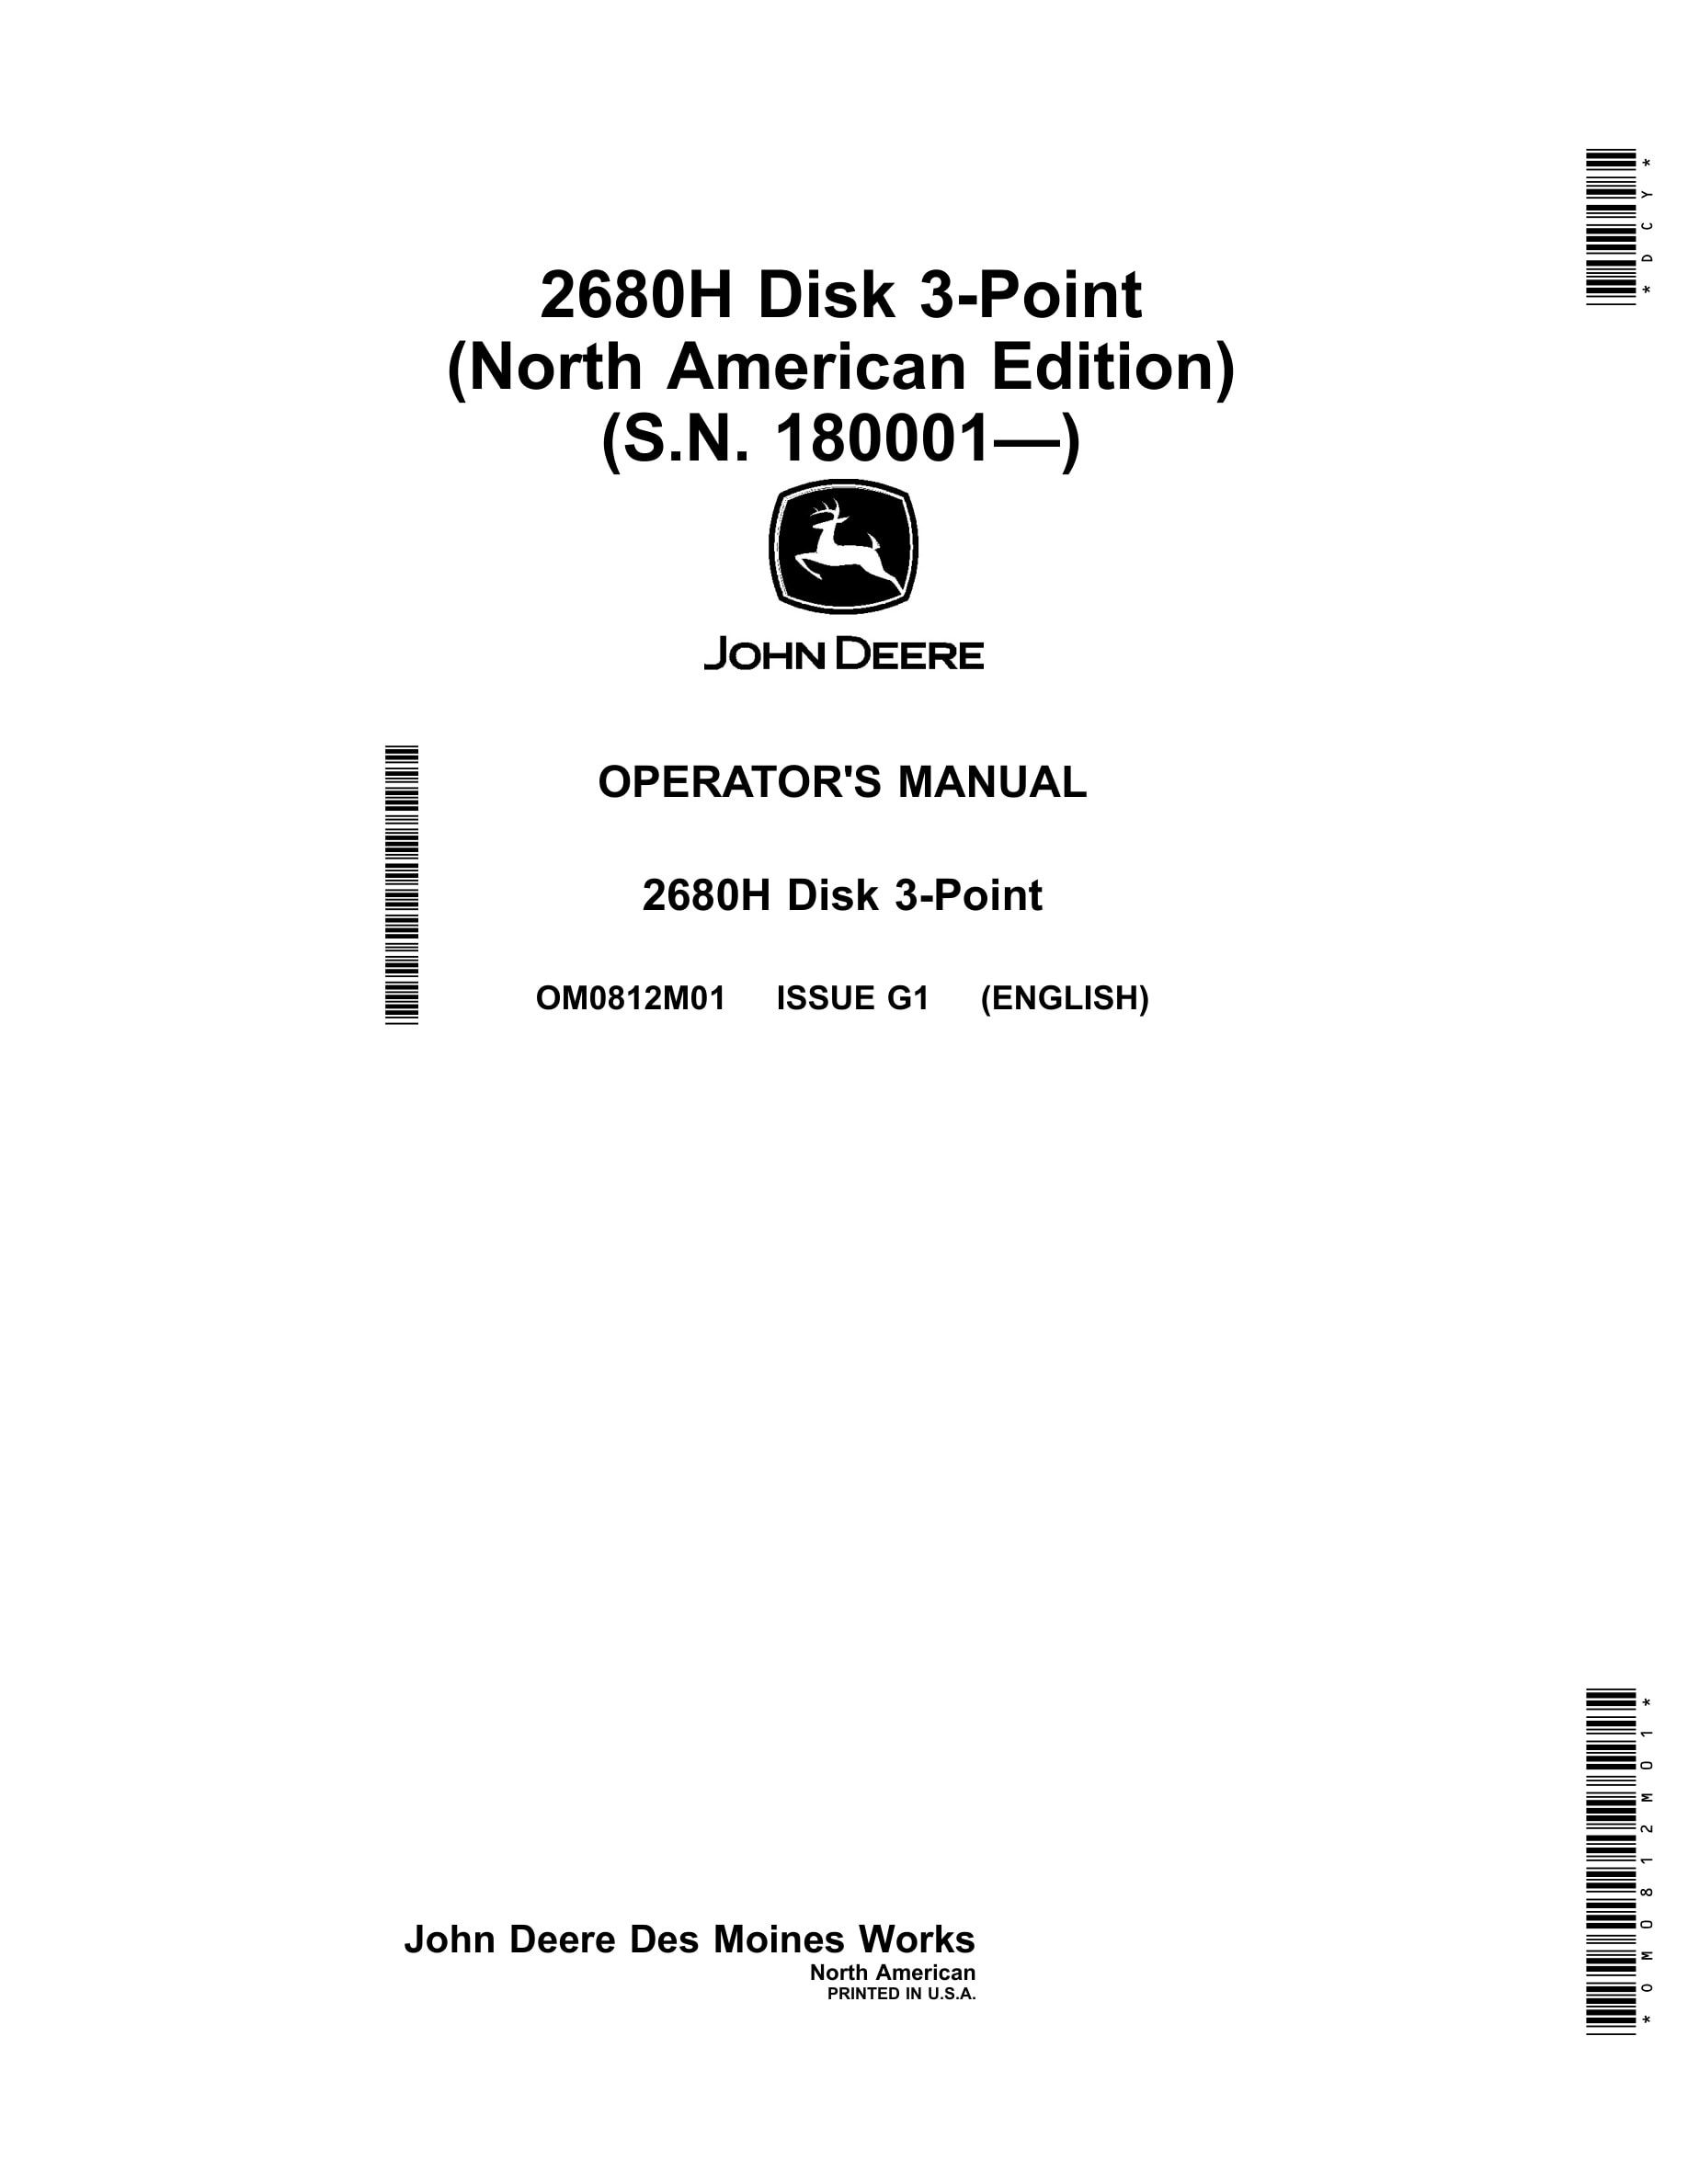 John Deere 2680H Disk 3-Point Operator Manual OM0812M01-1